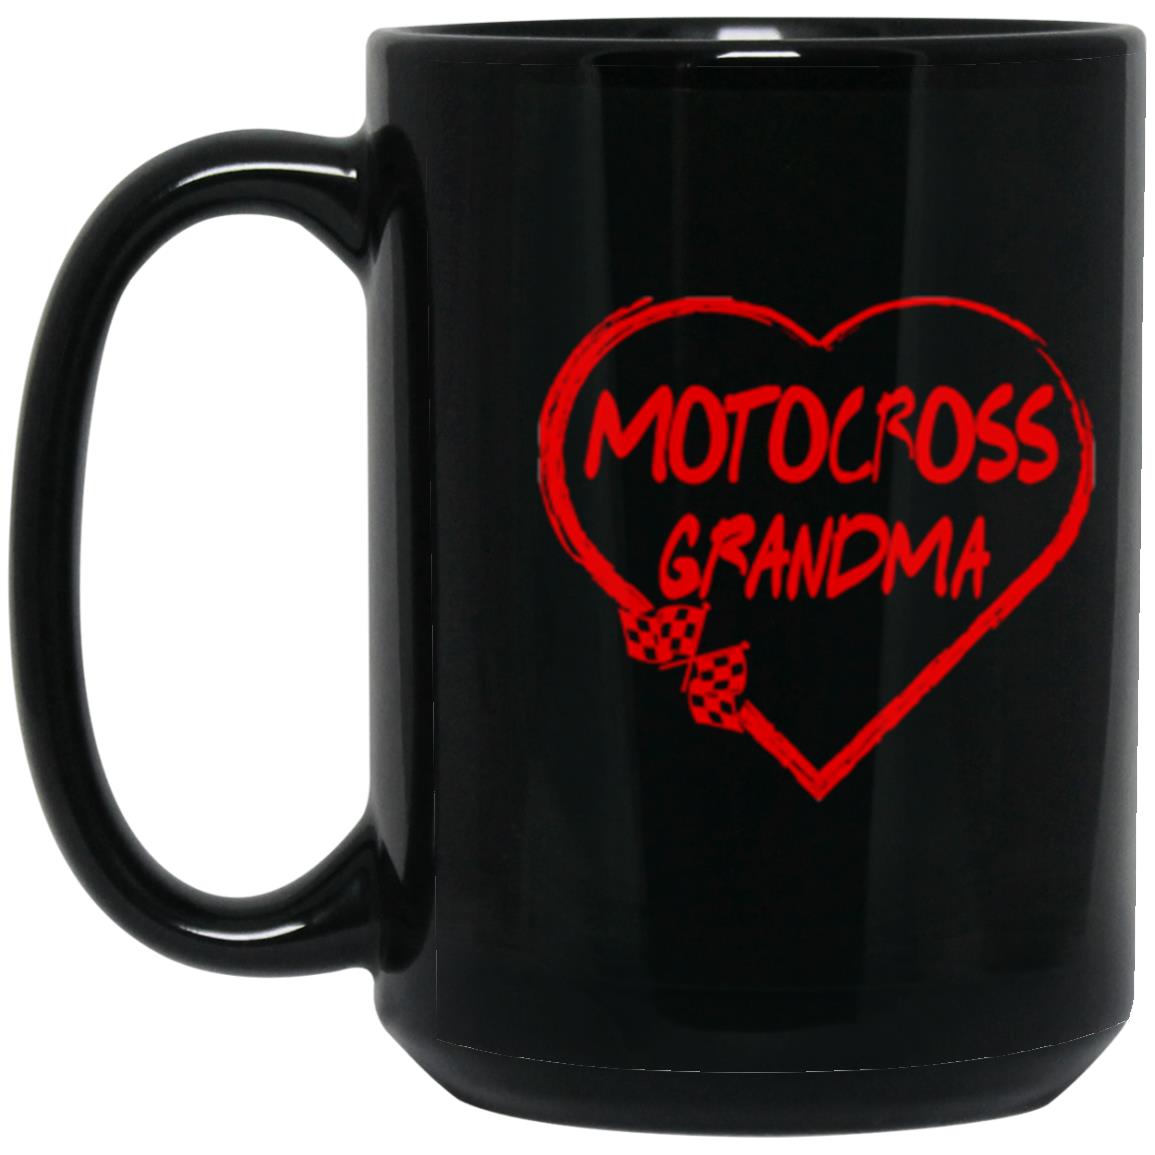 Motocross Grandma Heart 15 oz. Black Mug